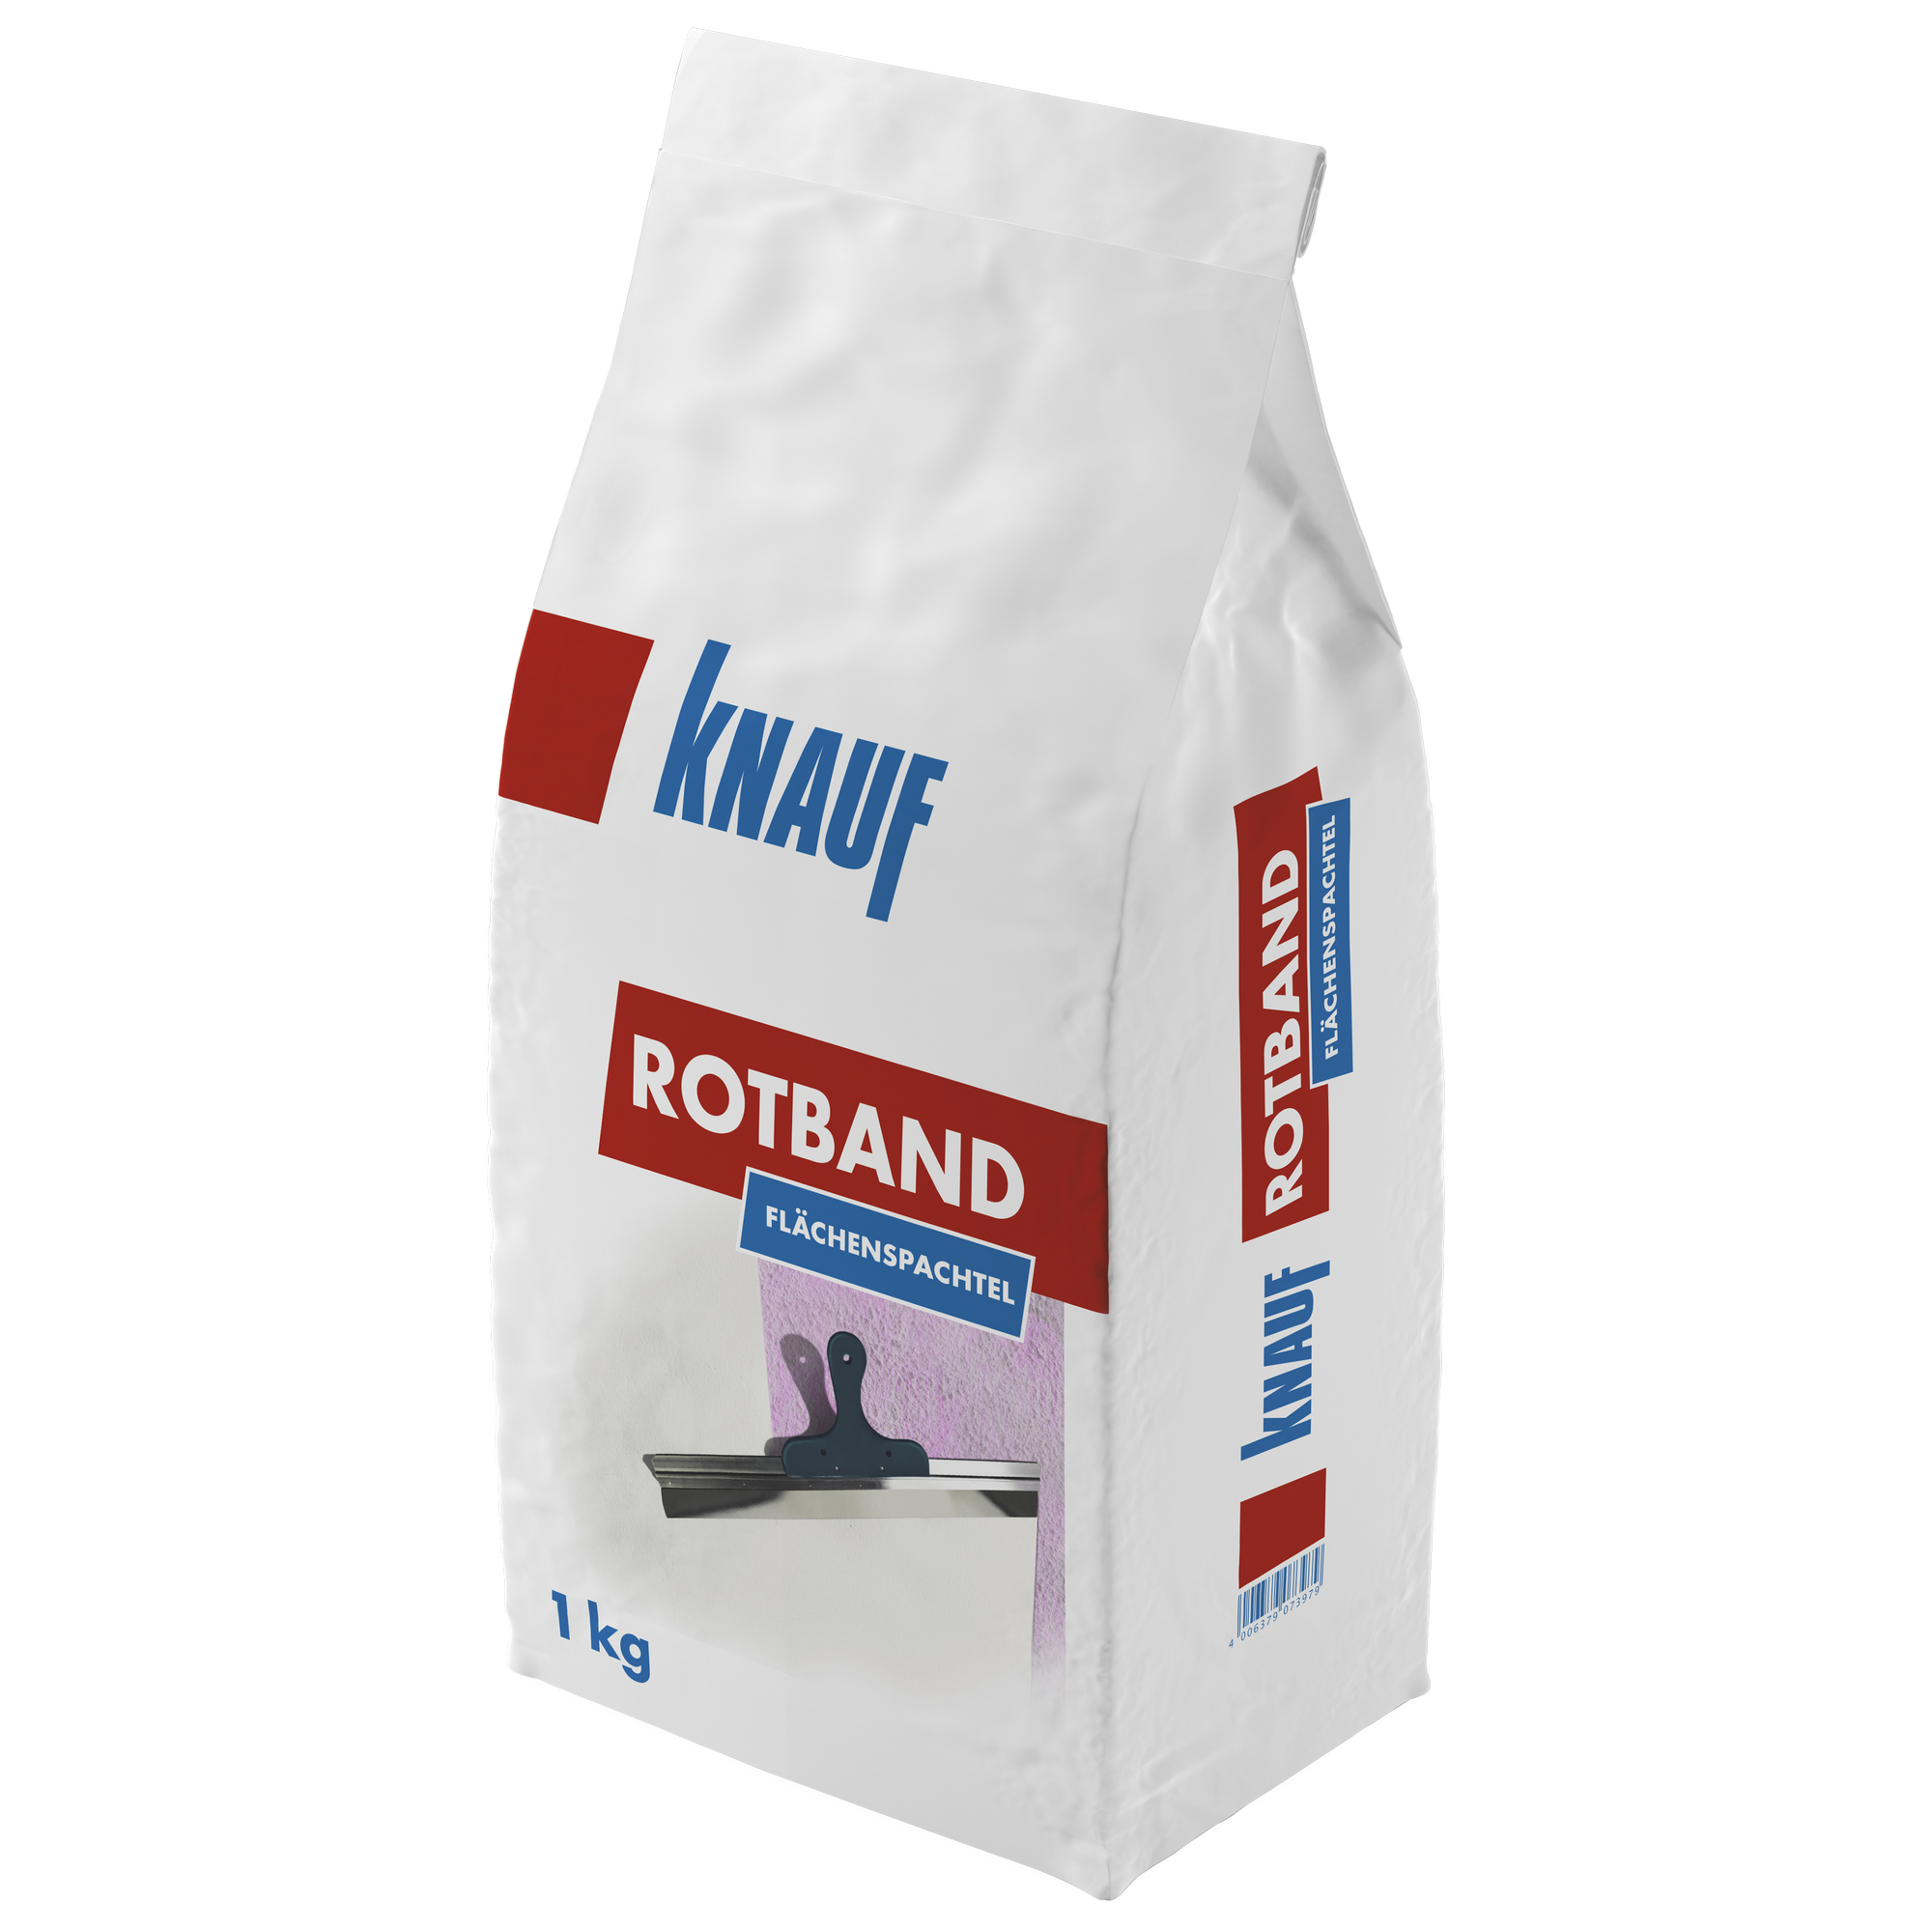 Flächenspachtel 'Rotband' 1 kg + product picture